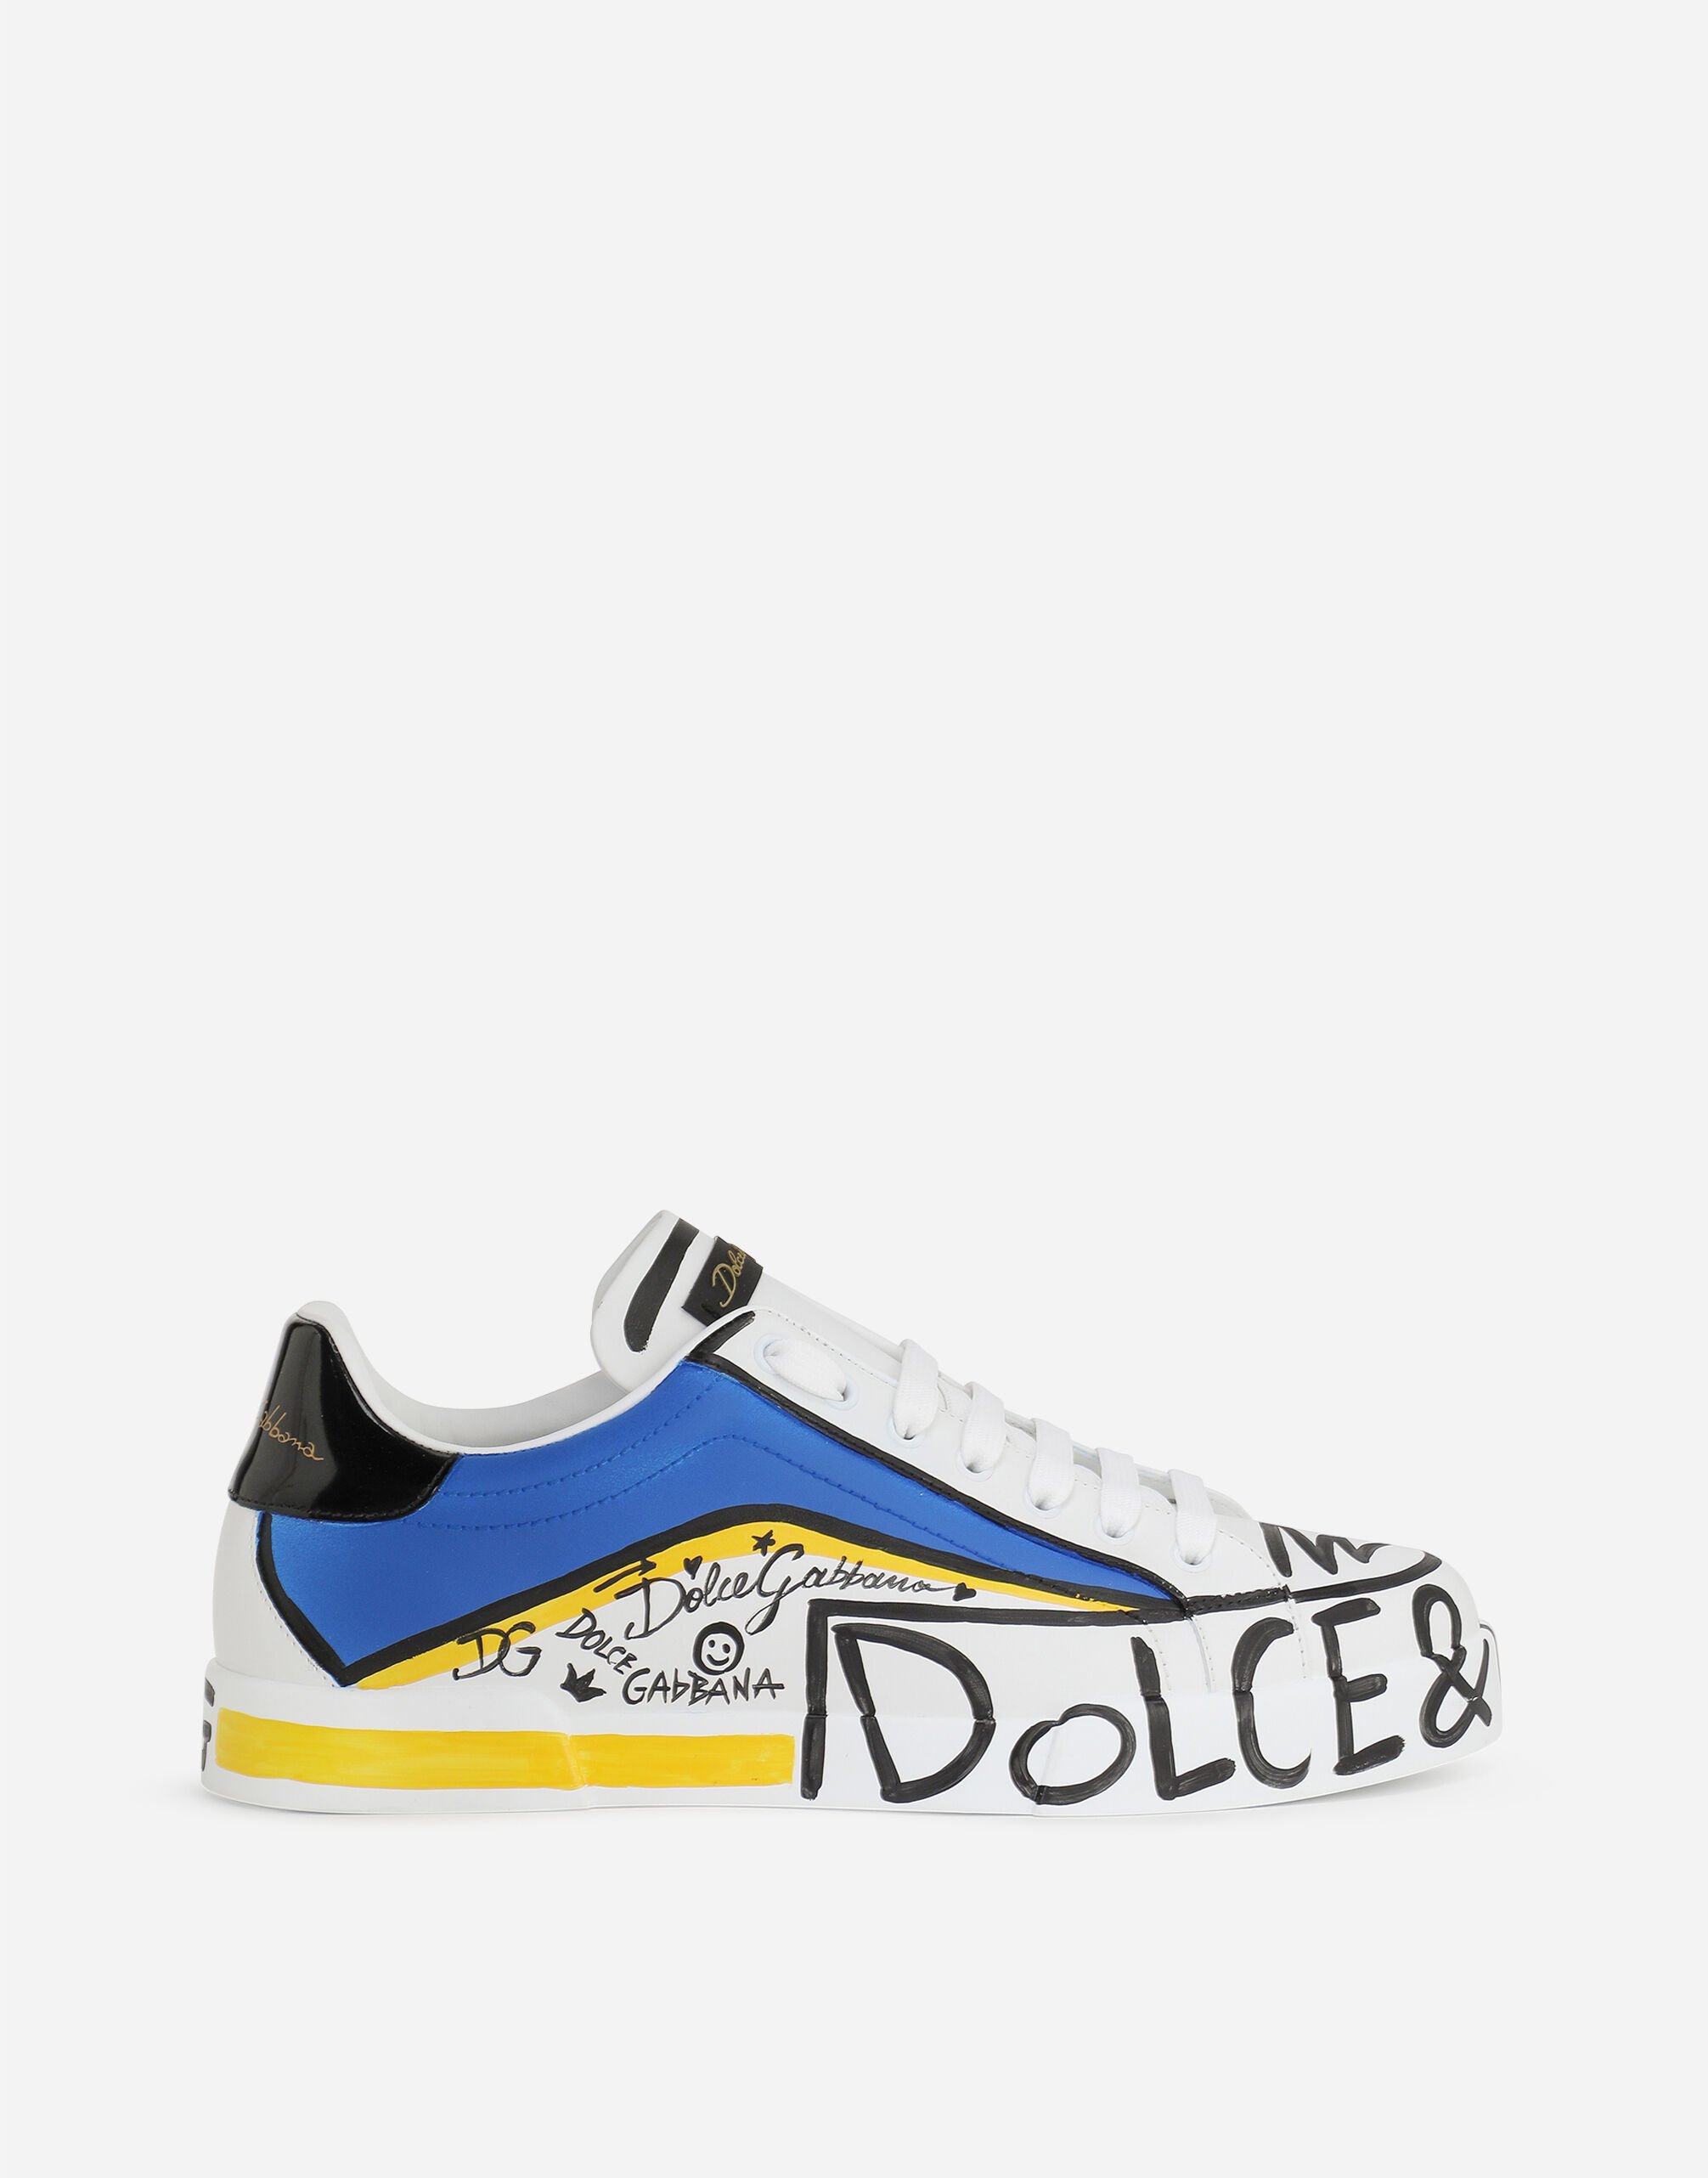 Dolce & Gabbana 限量版 Portofino 运动鞋 白 CS1558B5811